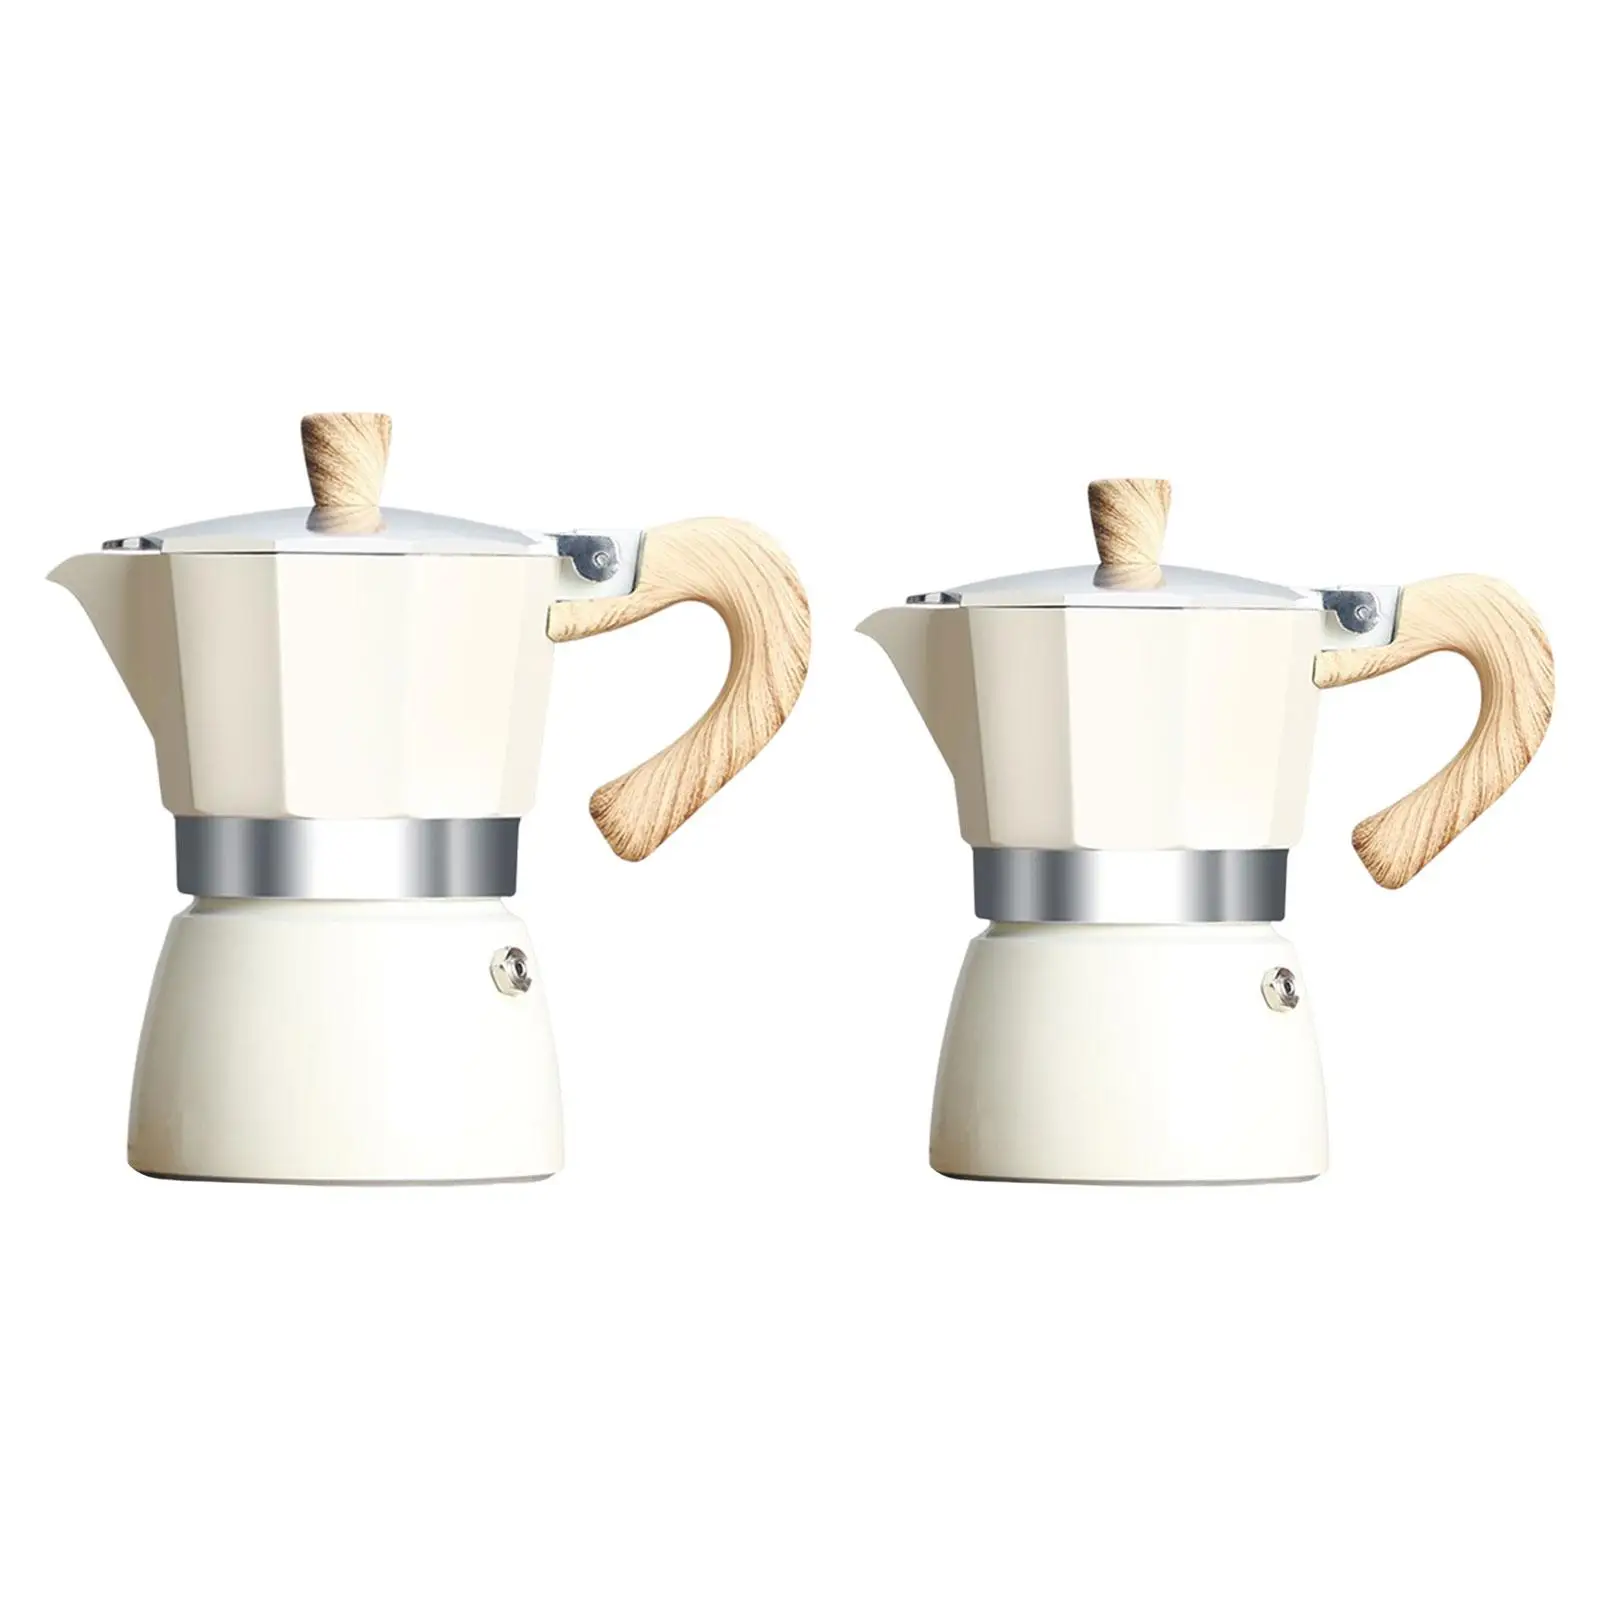 Coffee Maker Brewer Coffee Maker Pot Espresso Maker Percolator Coffee Maker Stovetop Coffee Pot for Cafe Office Home Restaurant